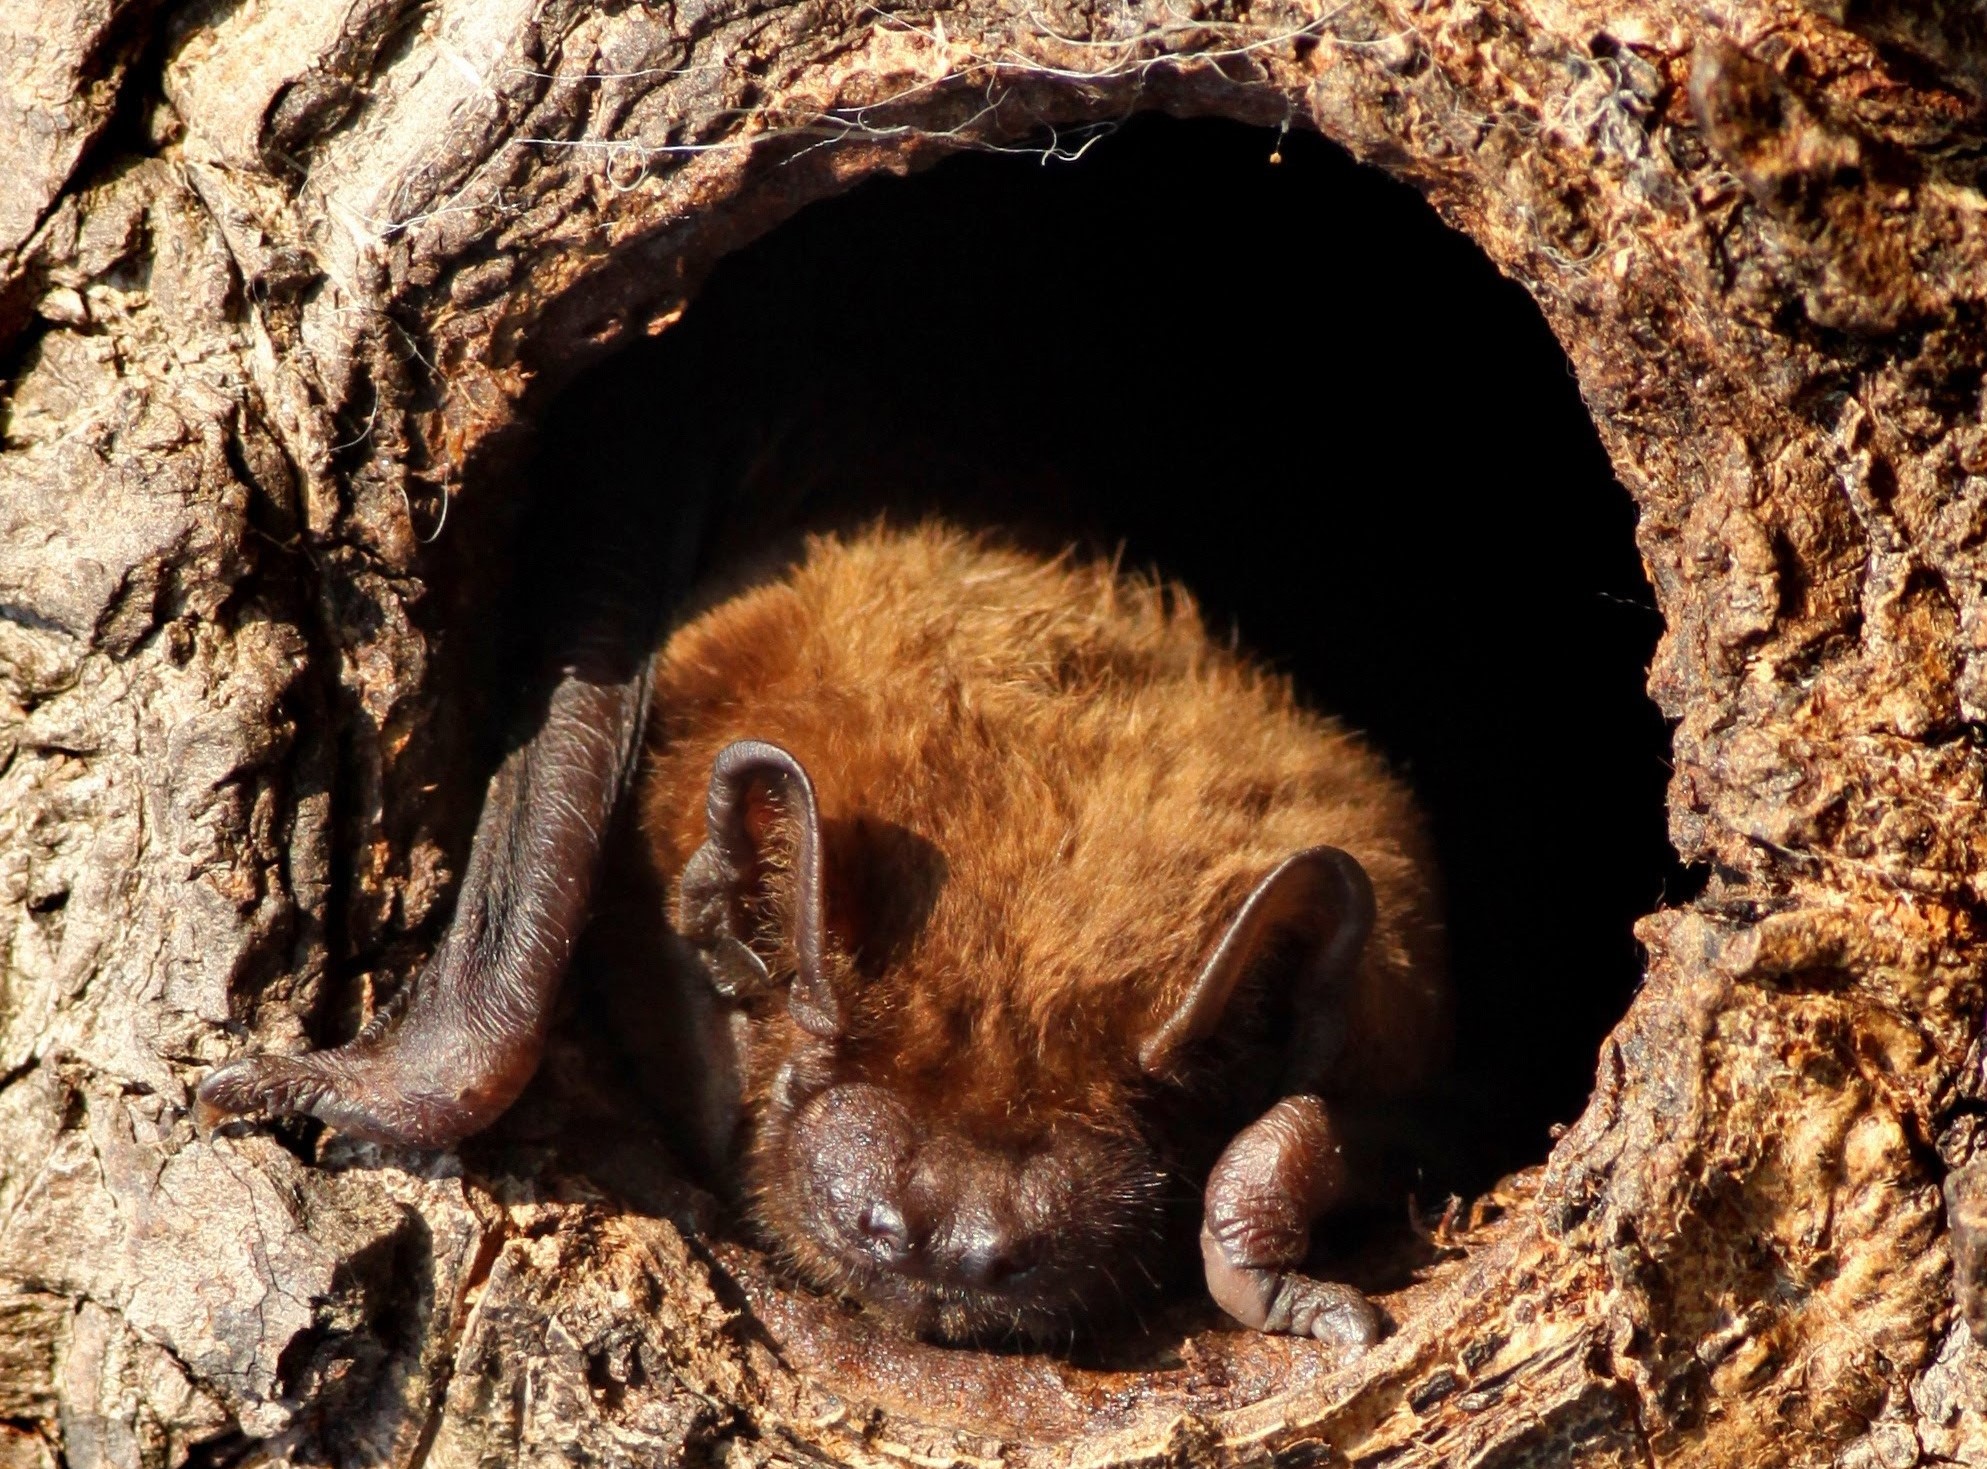 Close up of a Noctule bat resting in a tree hole